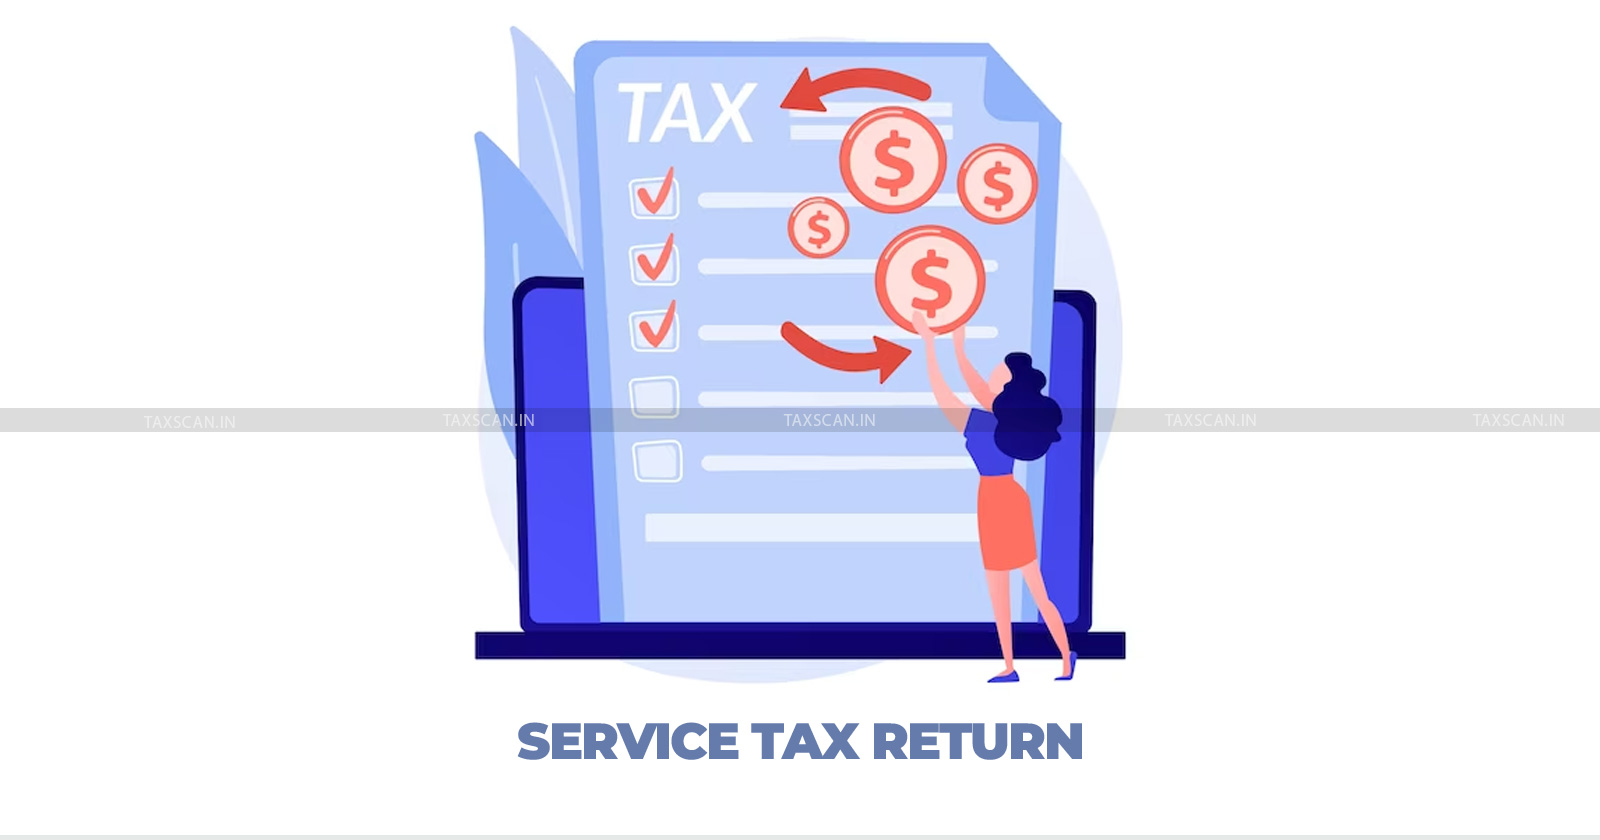 CESTAT - CESTAT Chandigarh - Service Tax - Service Tax Returns - taxscan